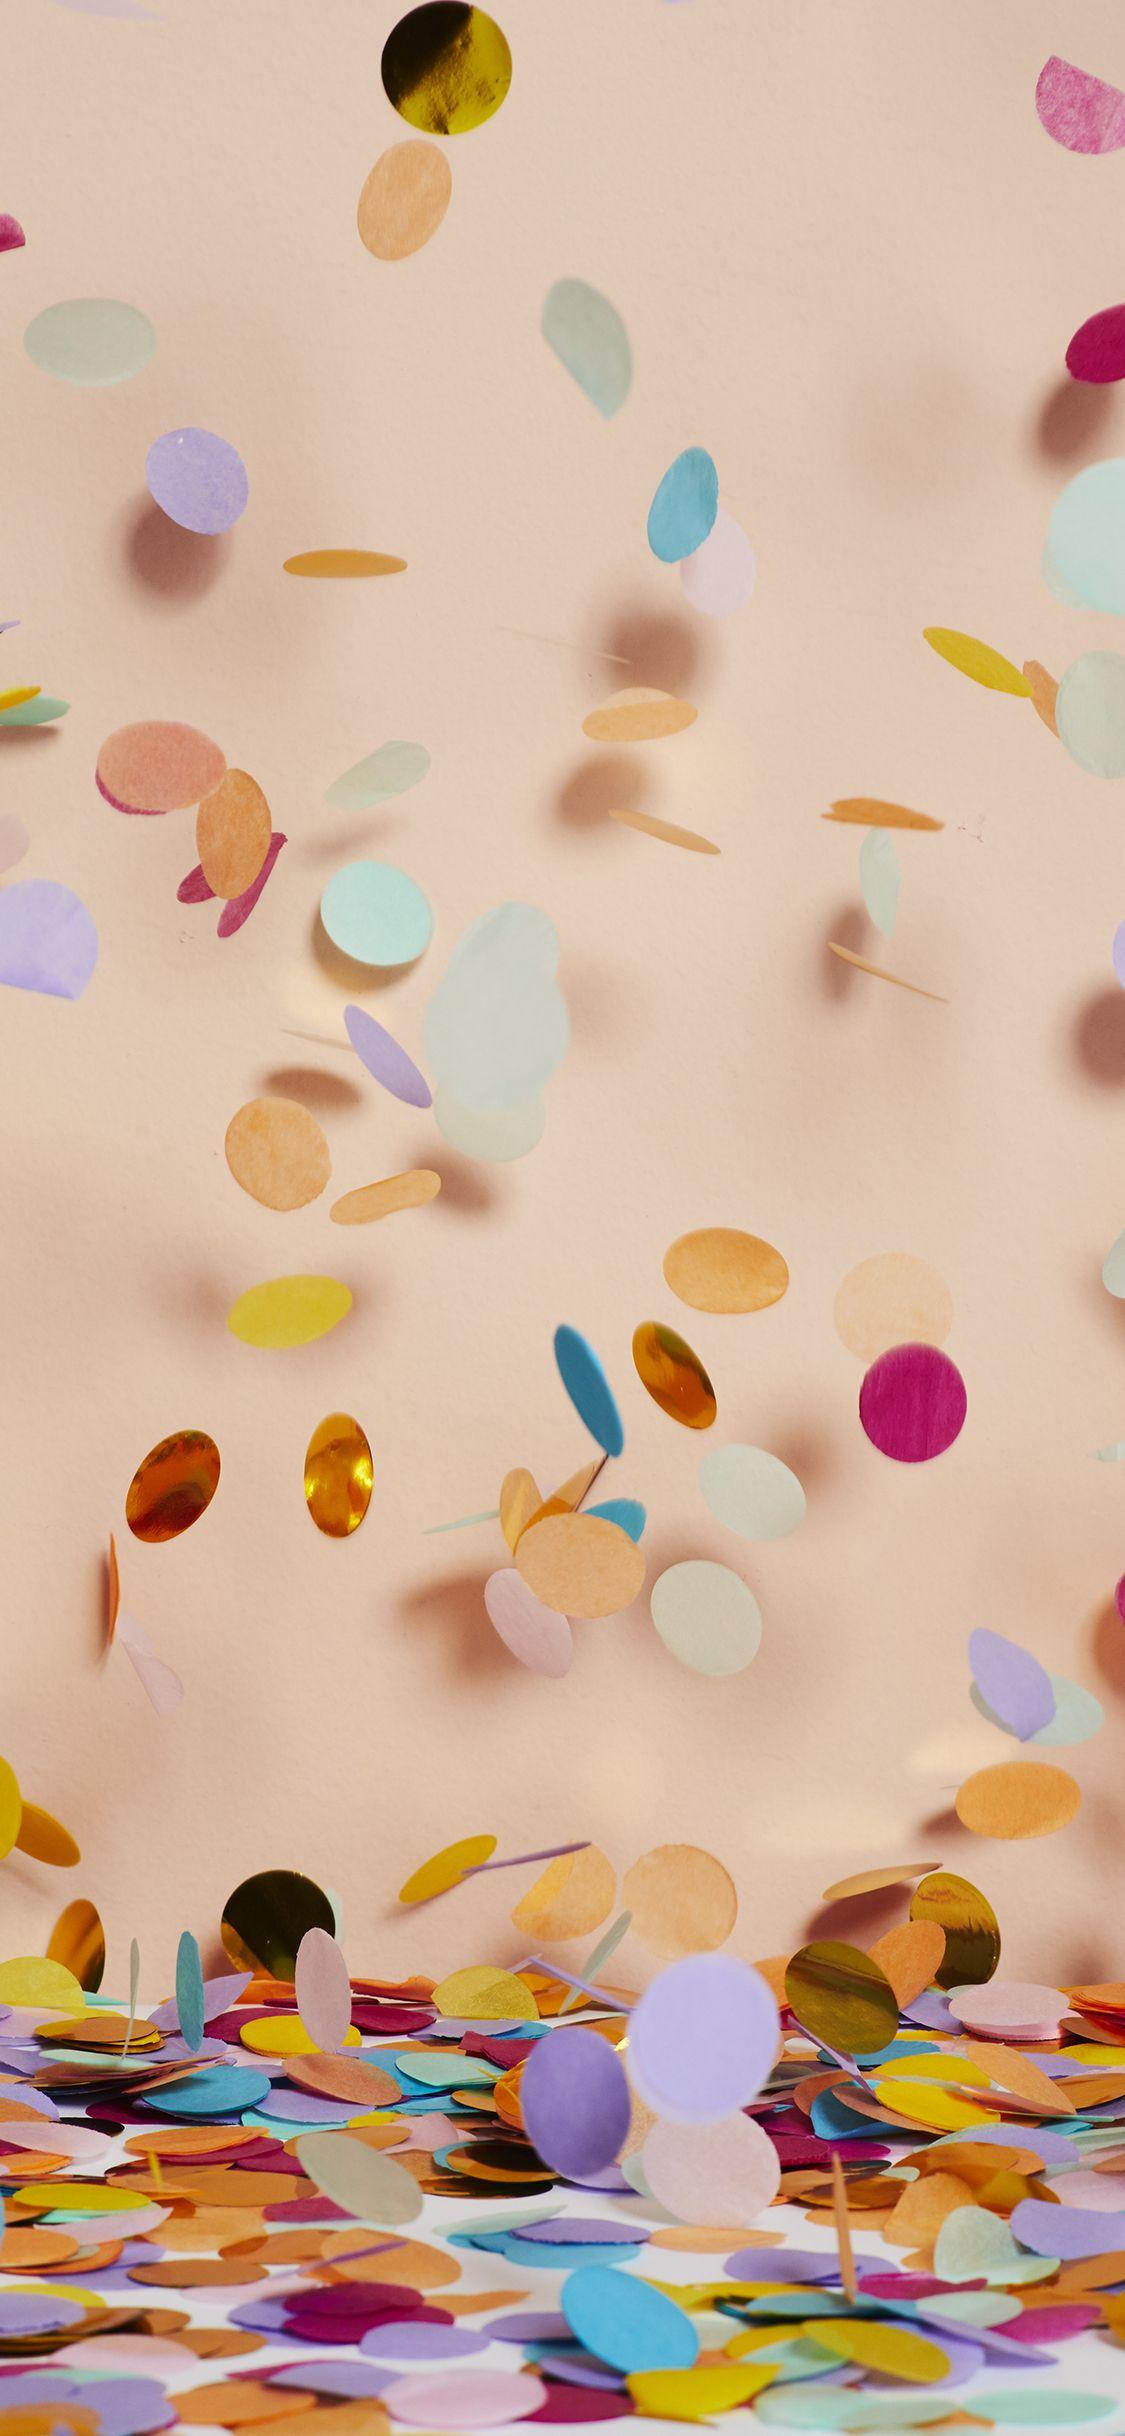 New Year, New Phone: Confetti Mobile Wallpaper + Main